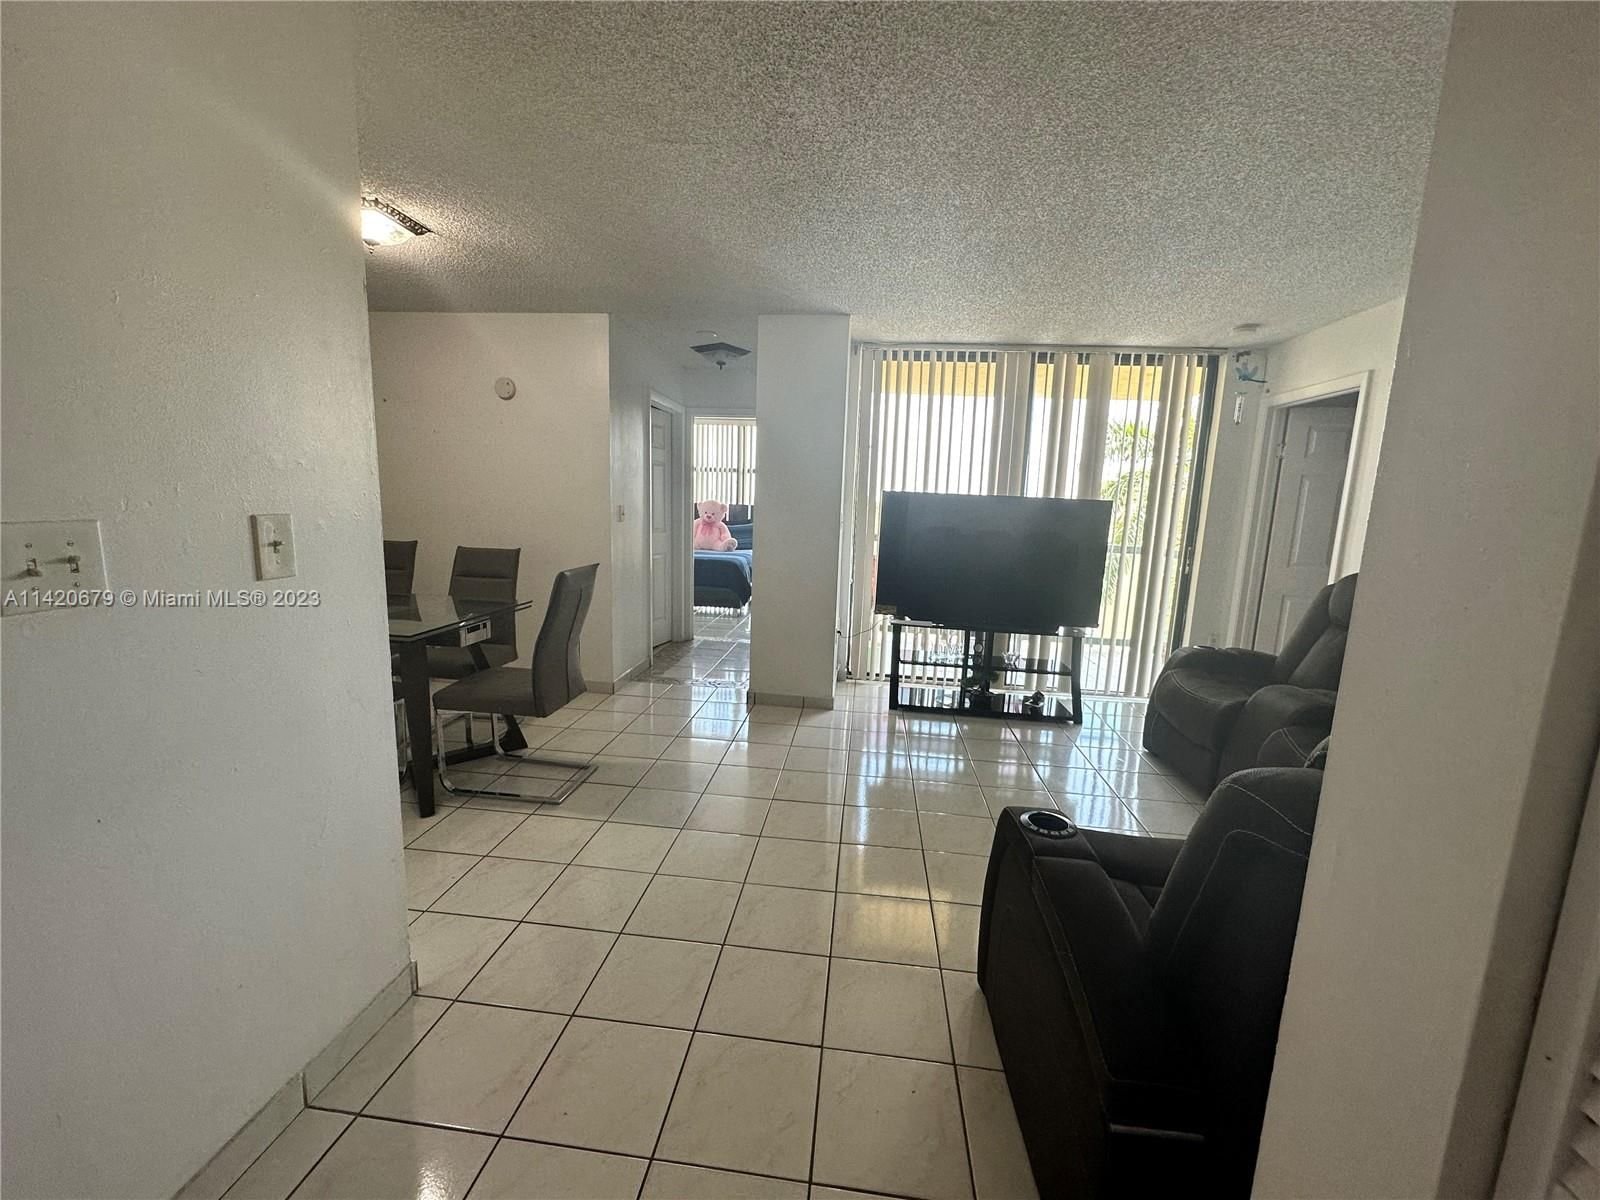 Real estate property located at 11790 18th St #524-3, Miami-Dade County, Miami, FL